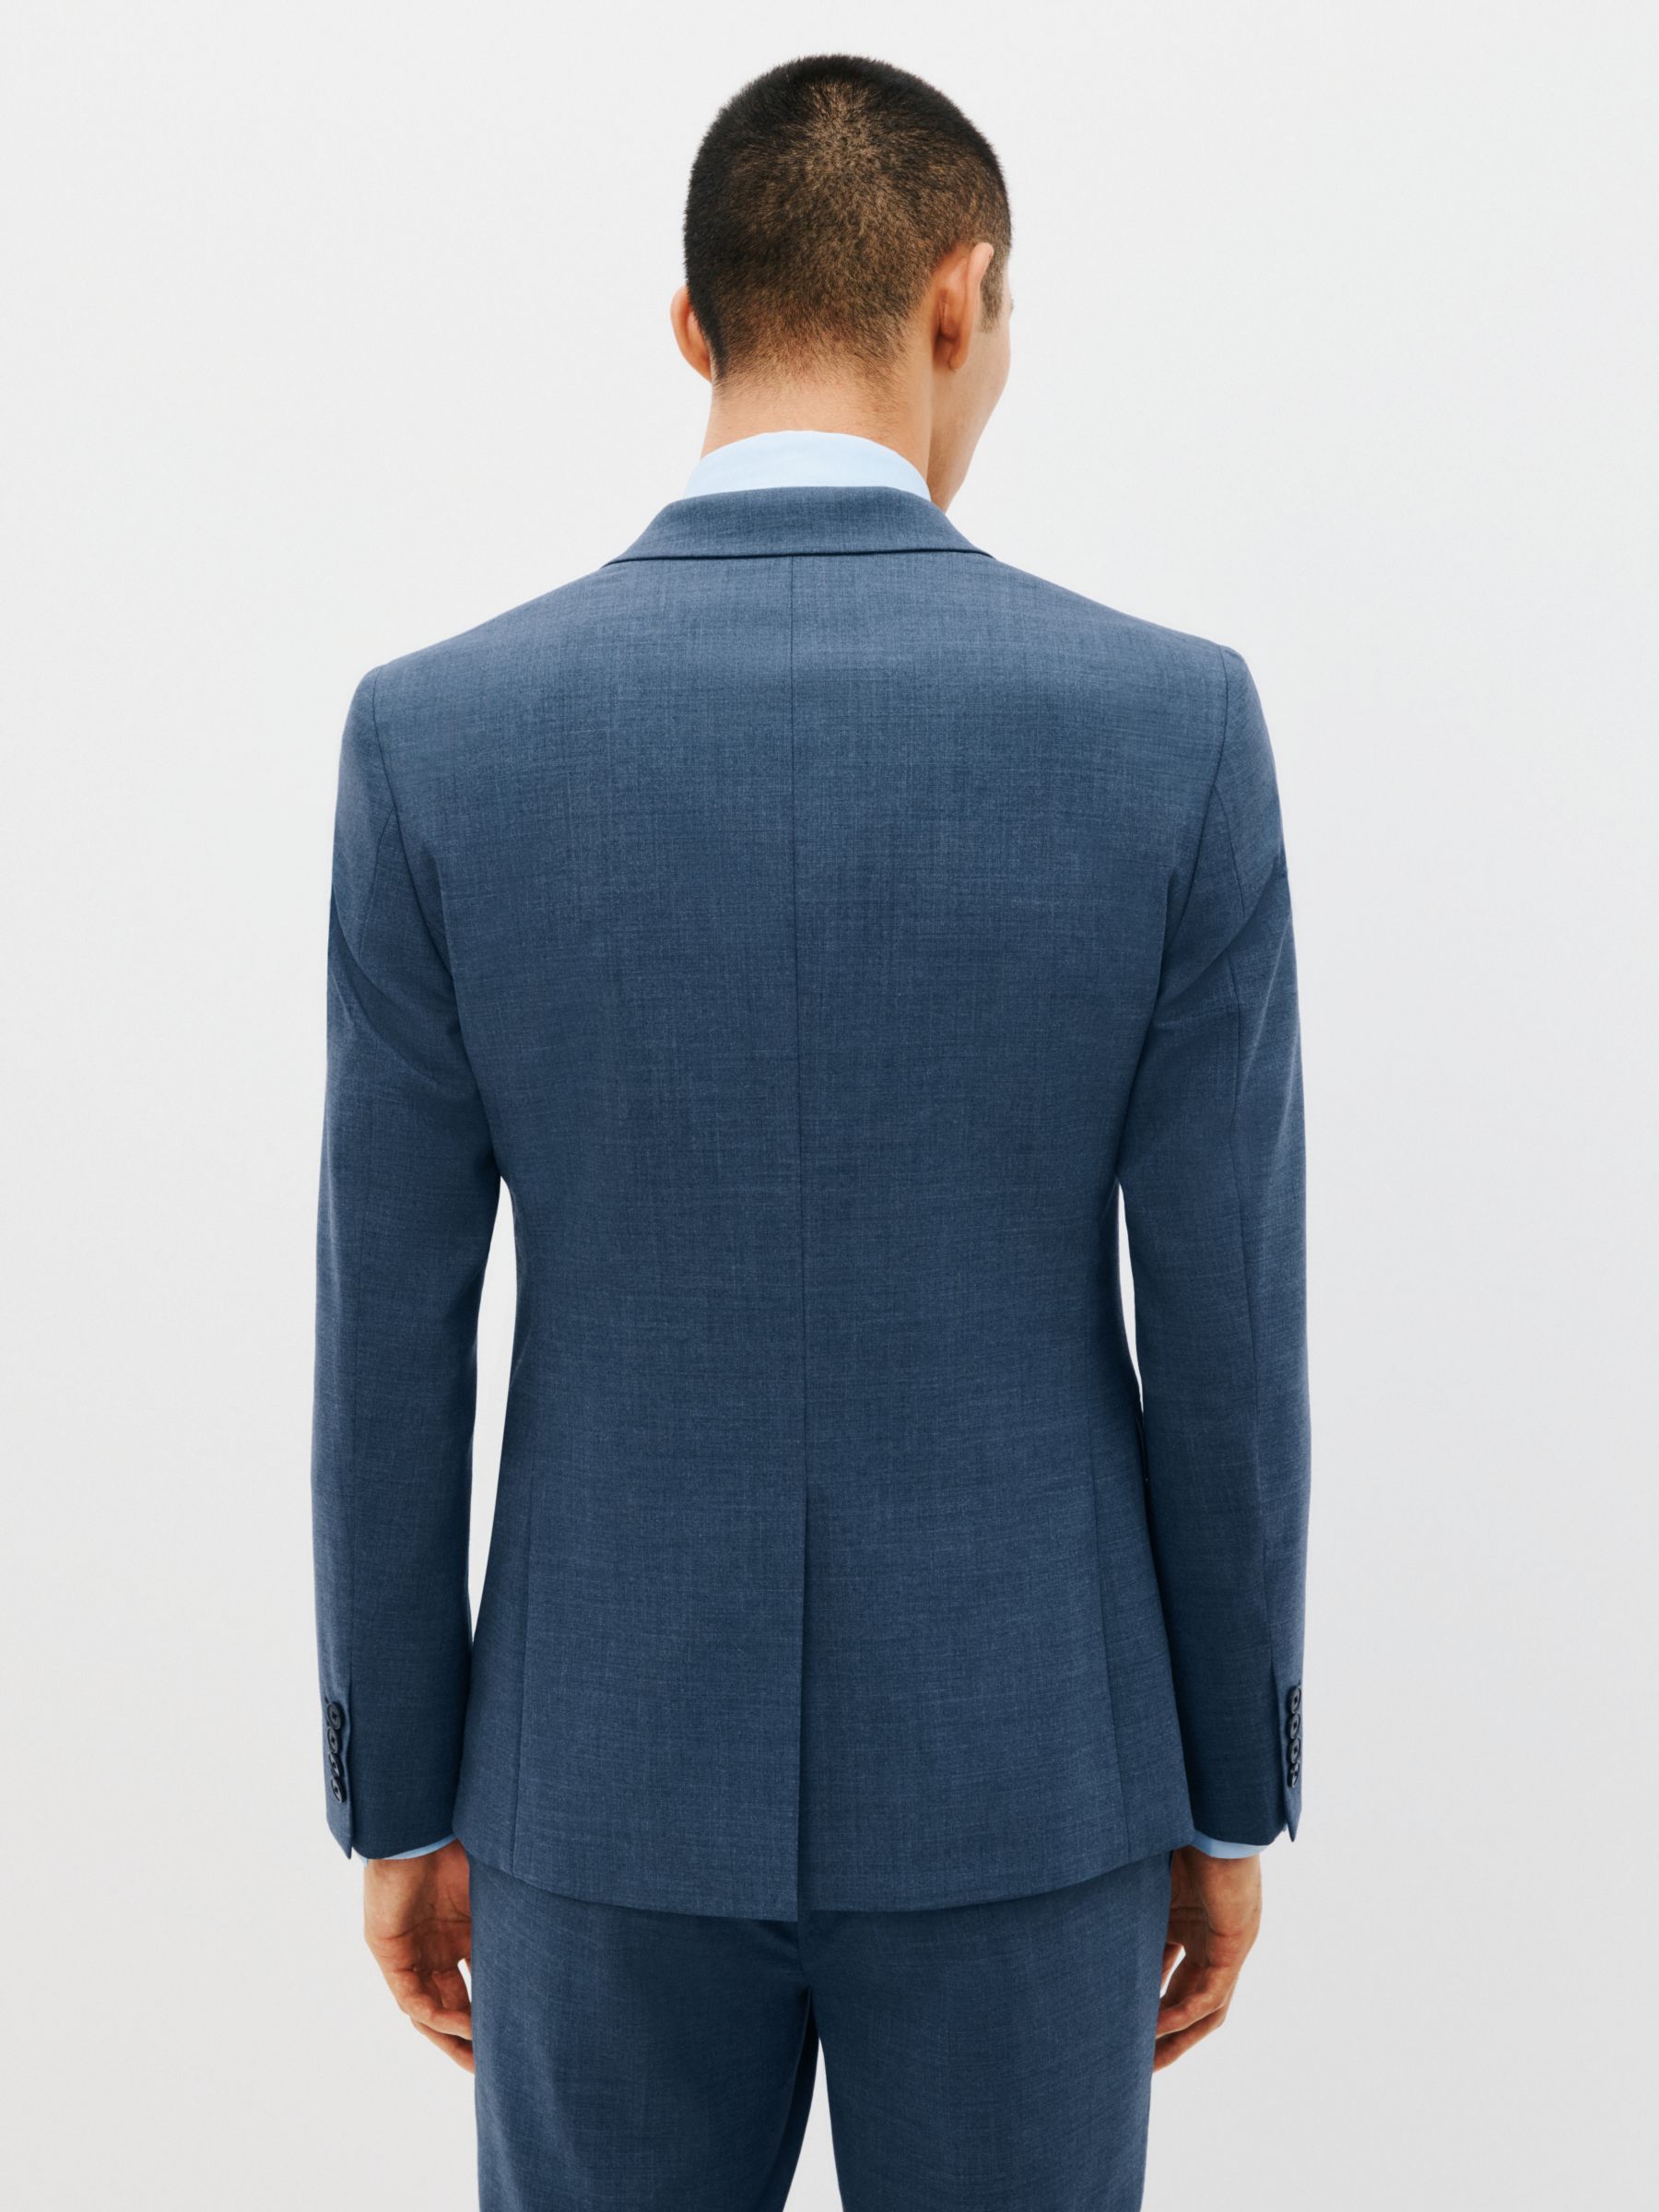 Kin Melange Slim Fit Suit Jacket, Airforce Blue at John Lewis & Partners